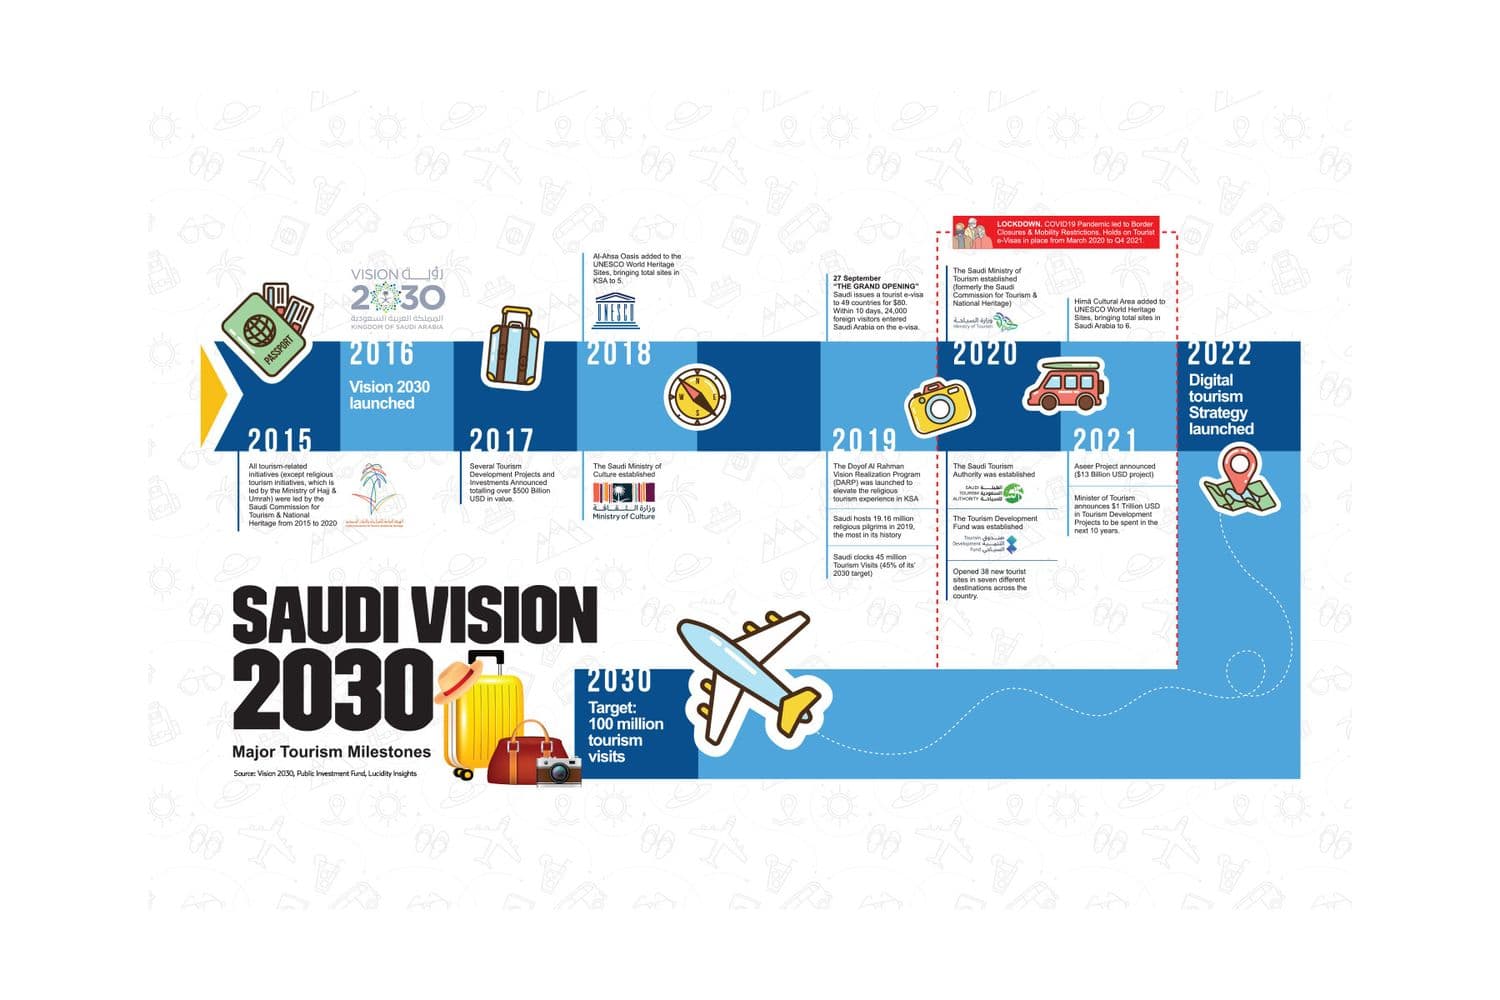 Saudi vision 2030 major tourism milestones